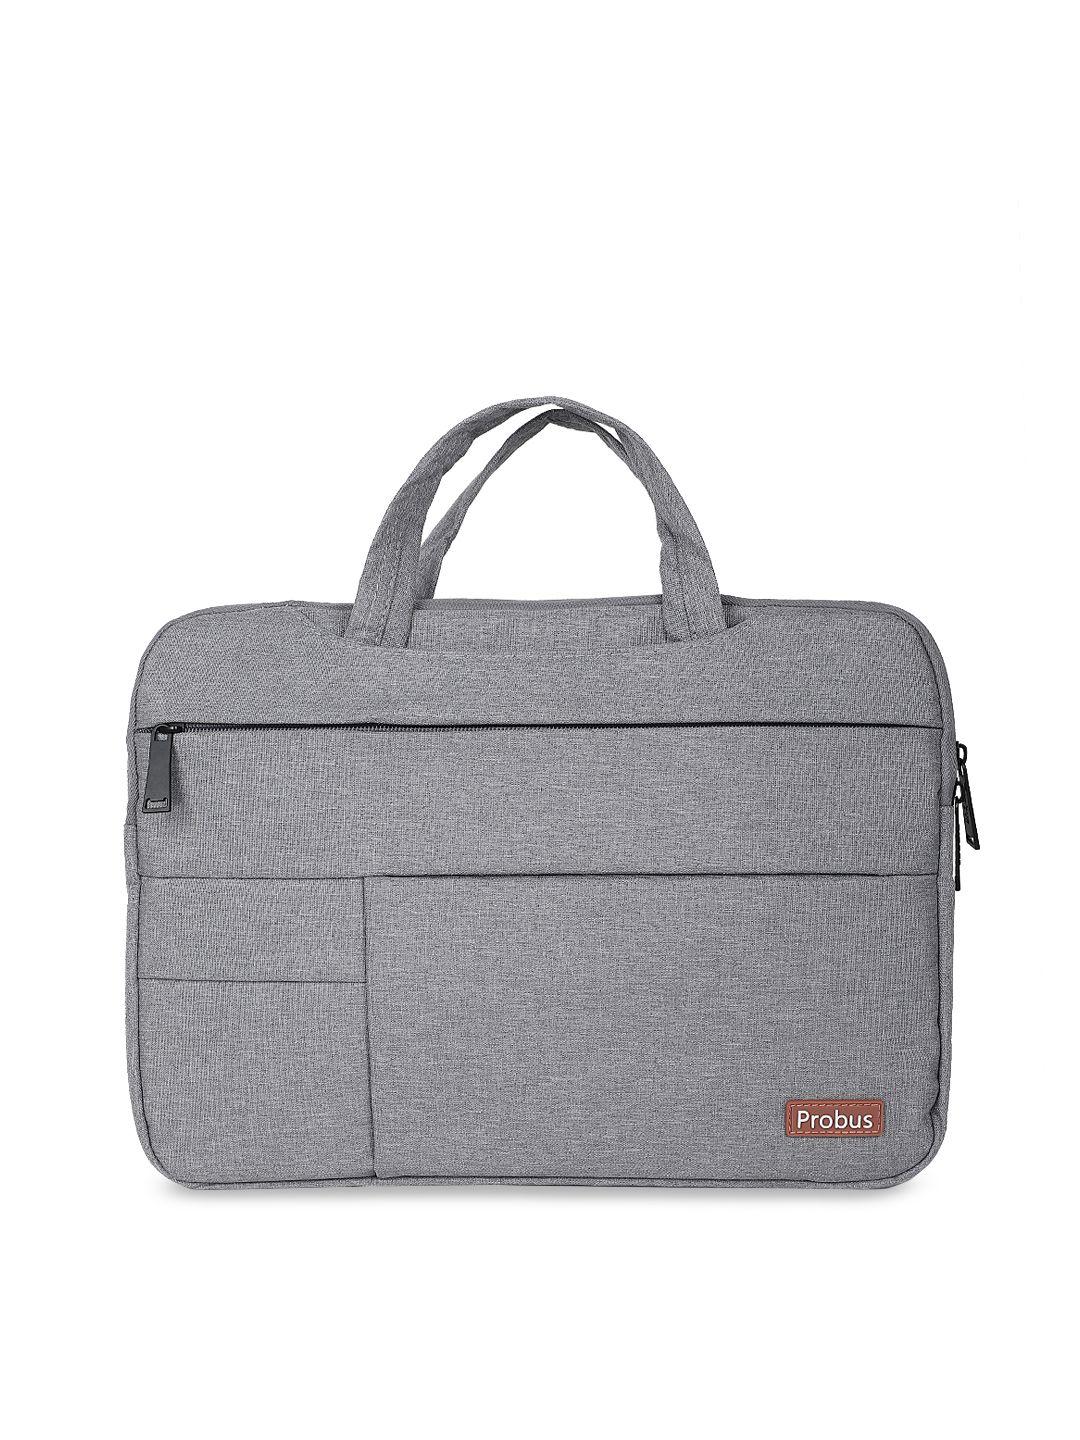 probus unisex grey solid 15.6 inches laptop bag